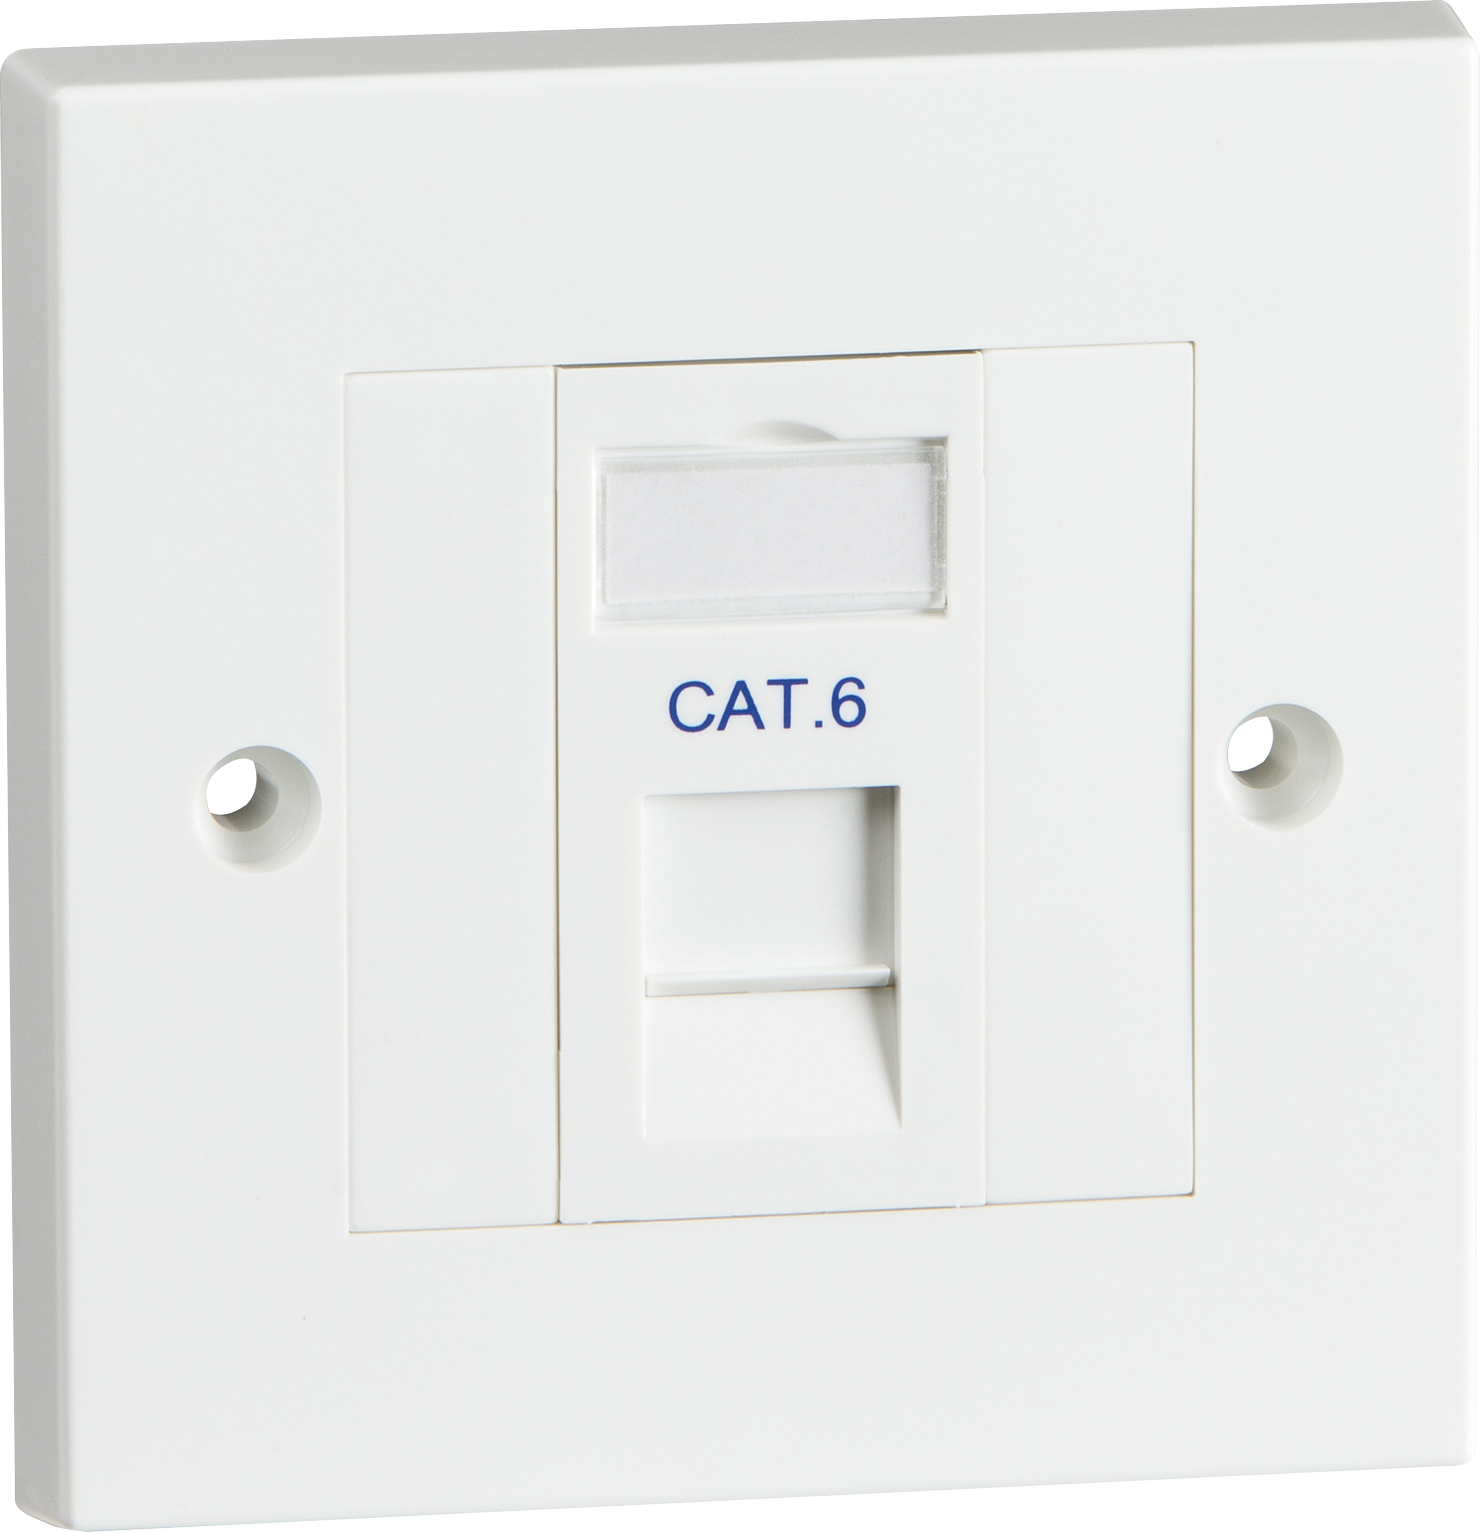 Single Cat6 Outlet Kit - NET6KIT1 